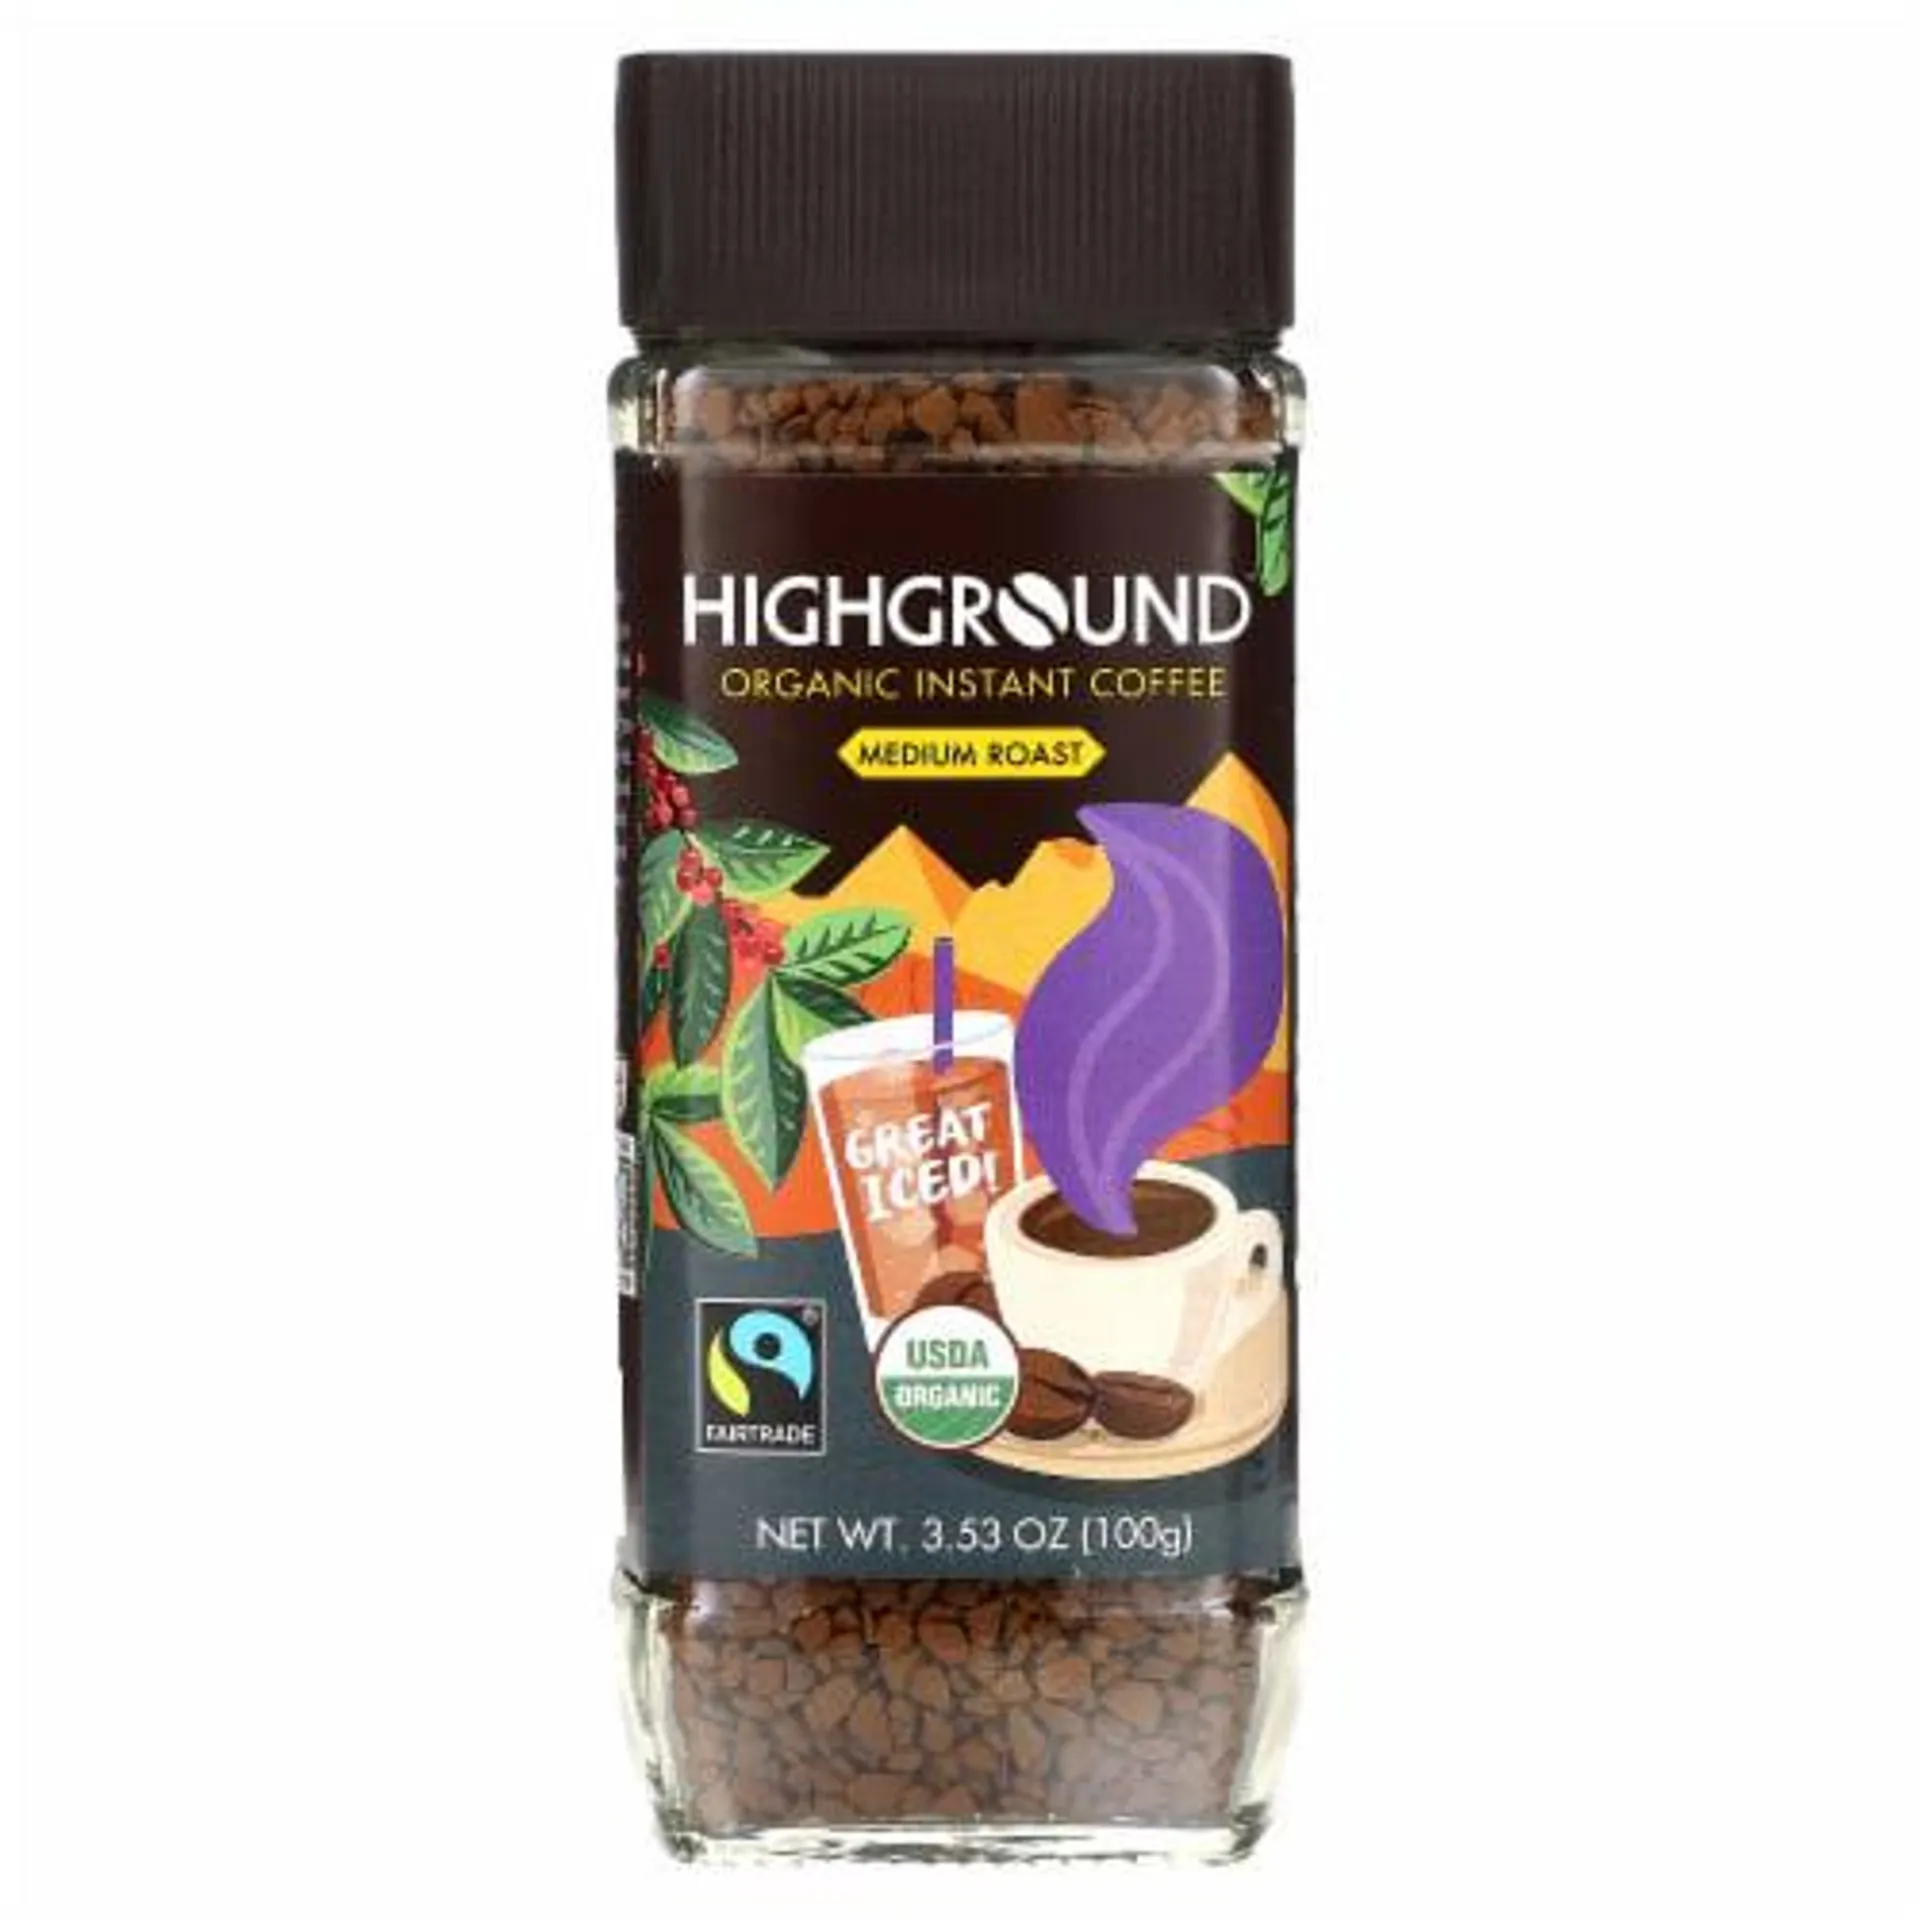 Highground Organic Instant Coffee - Medium Roast